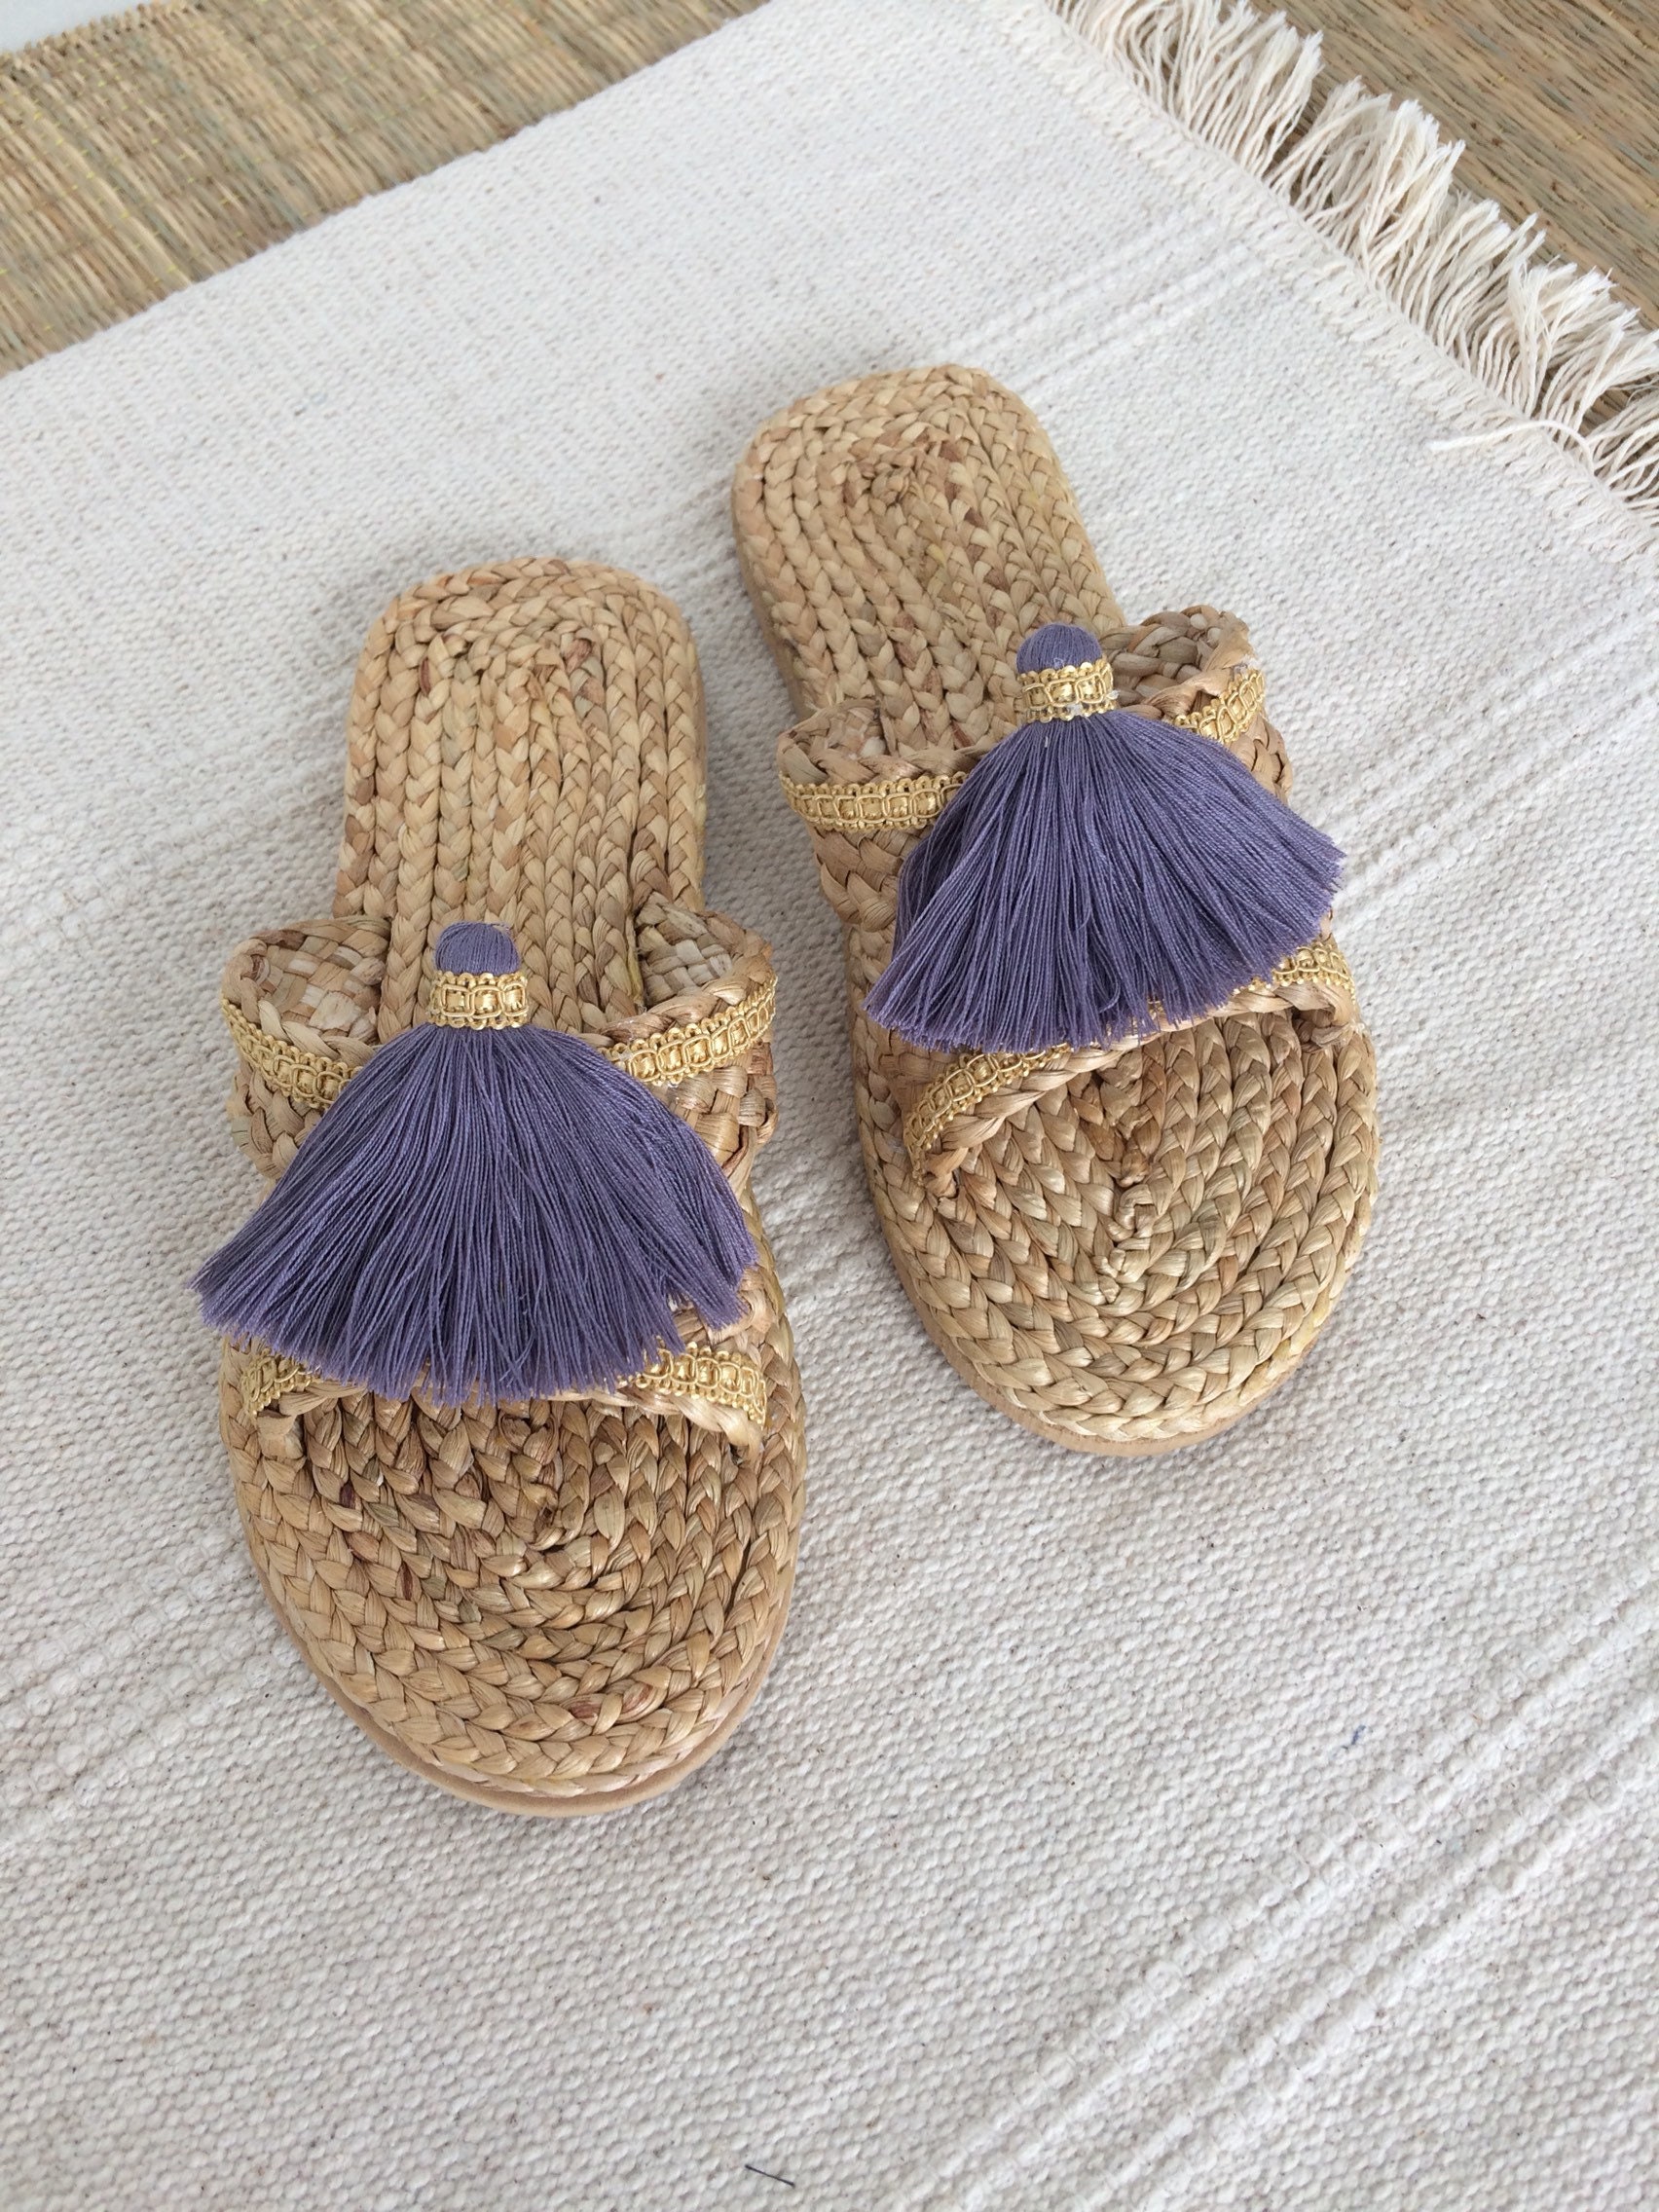 Tassel Relaxing Sandals / Greek Sandals / Beach Sandals / Pom | Etsy